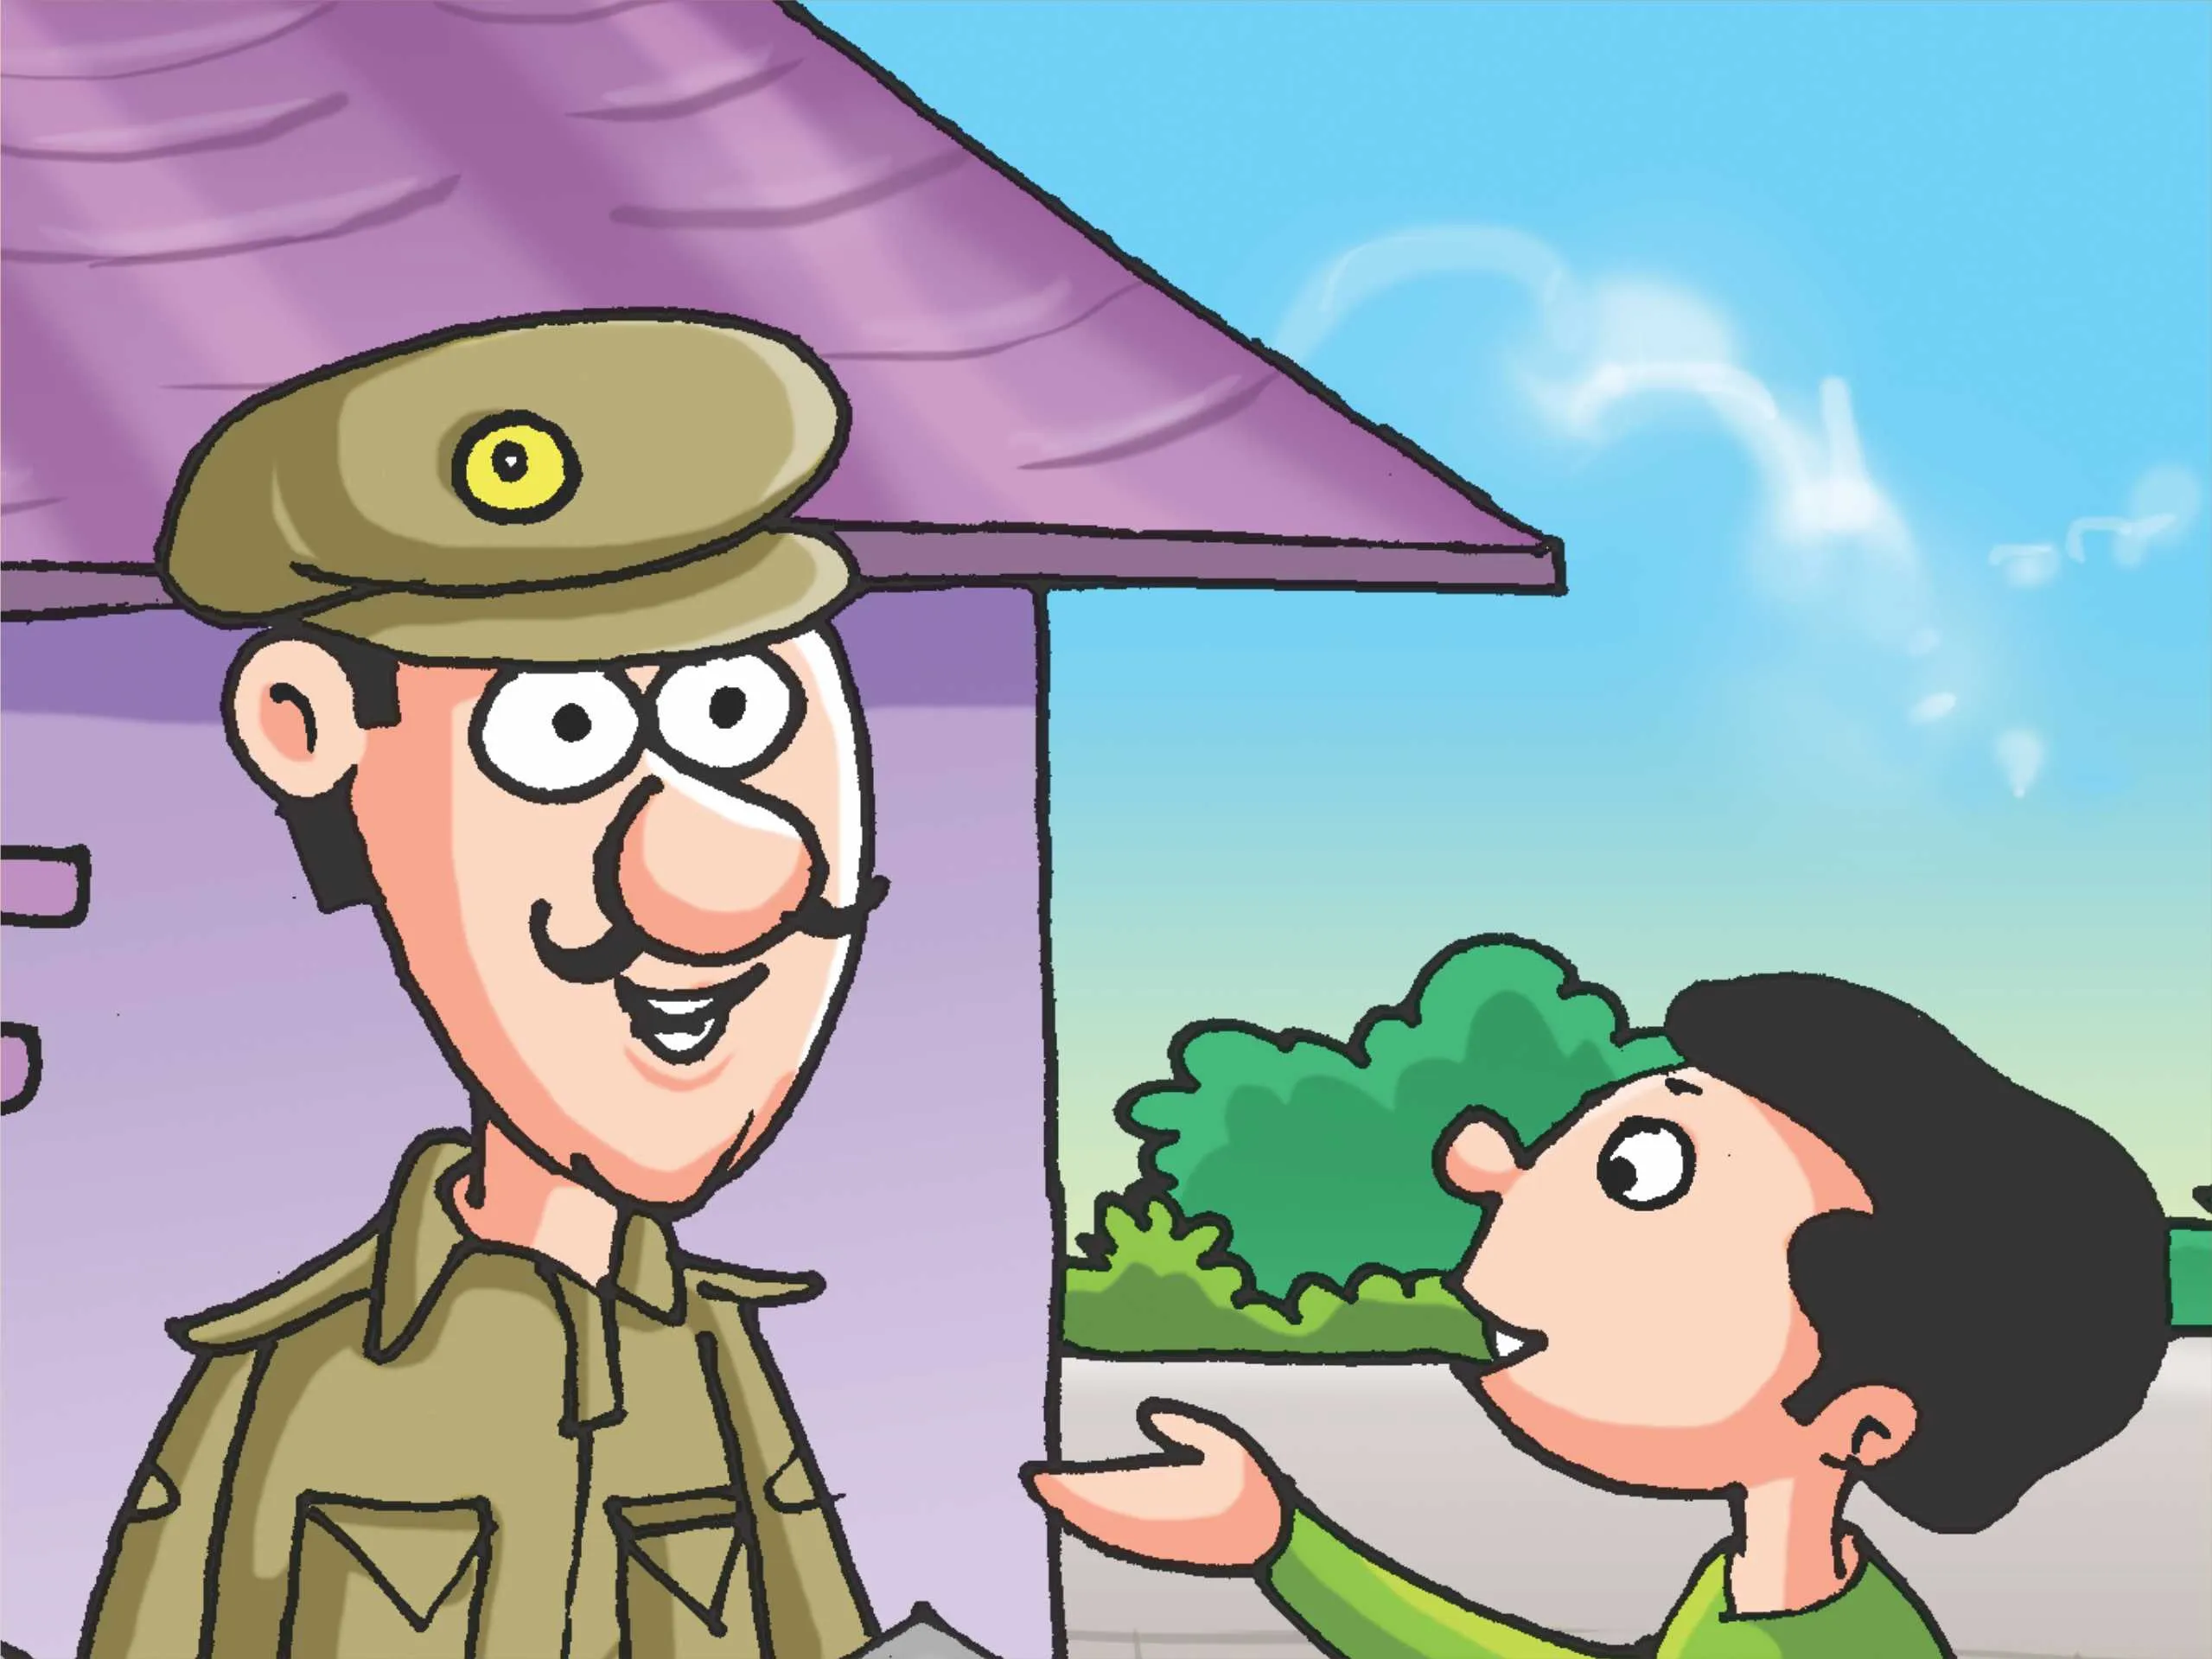 Police Officer Talking to a School Boy Cartoon Image